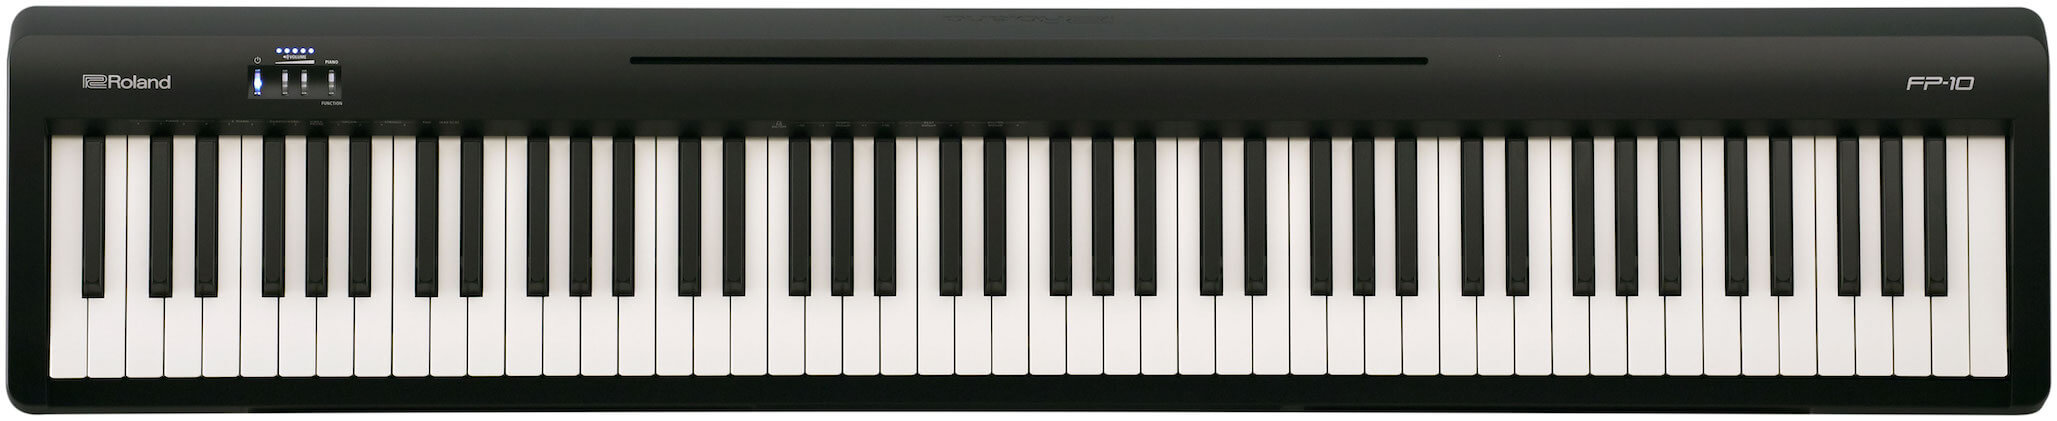 playing piano on a keyboard 